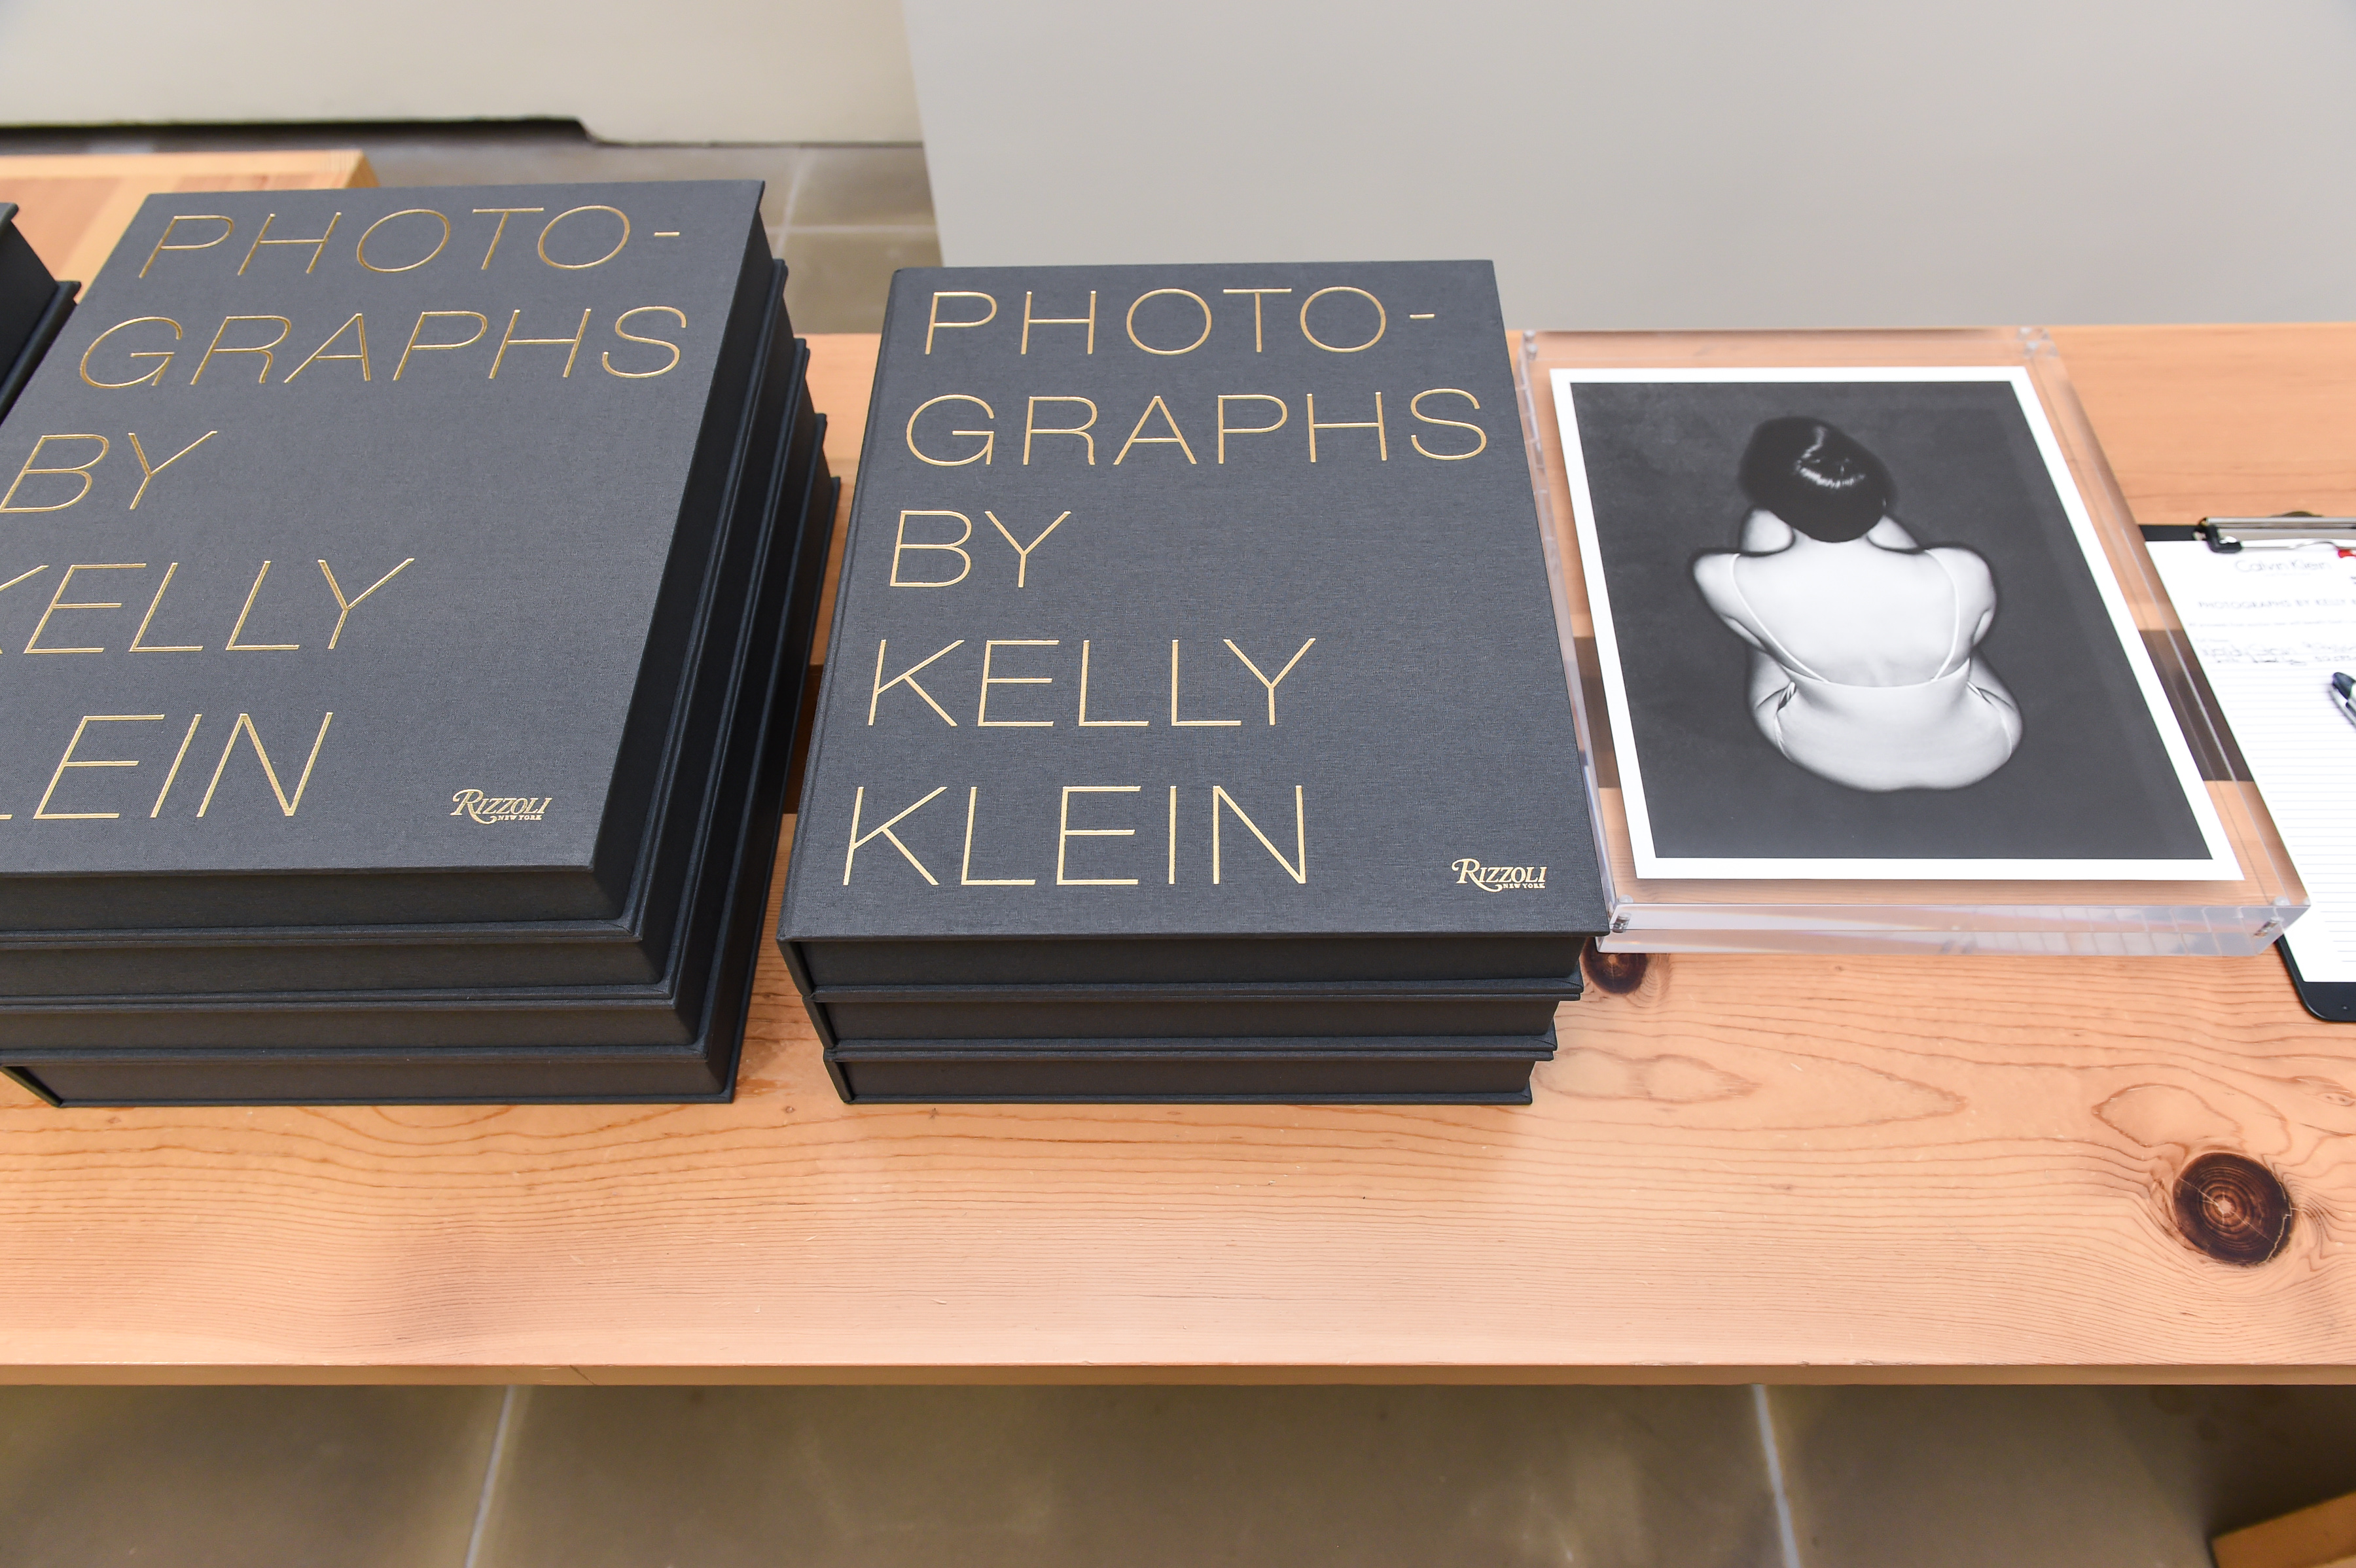 Calvin Klein Collection Celebrates Kelly Klein's New Book - Daily Front Row